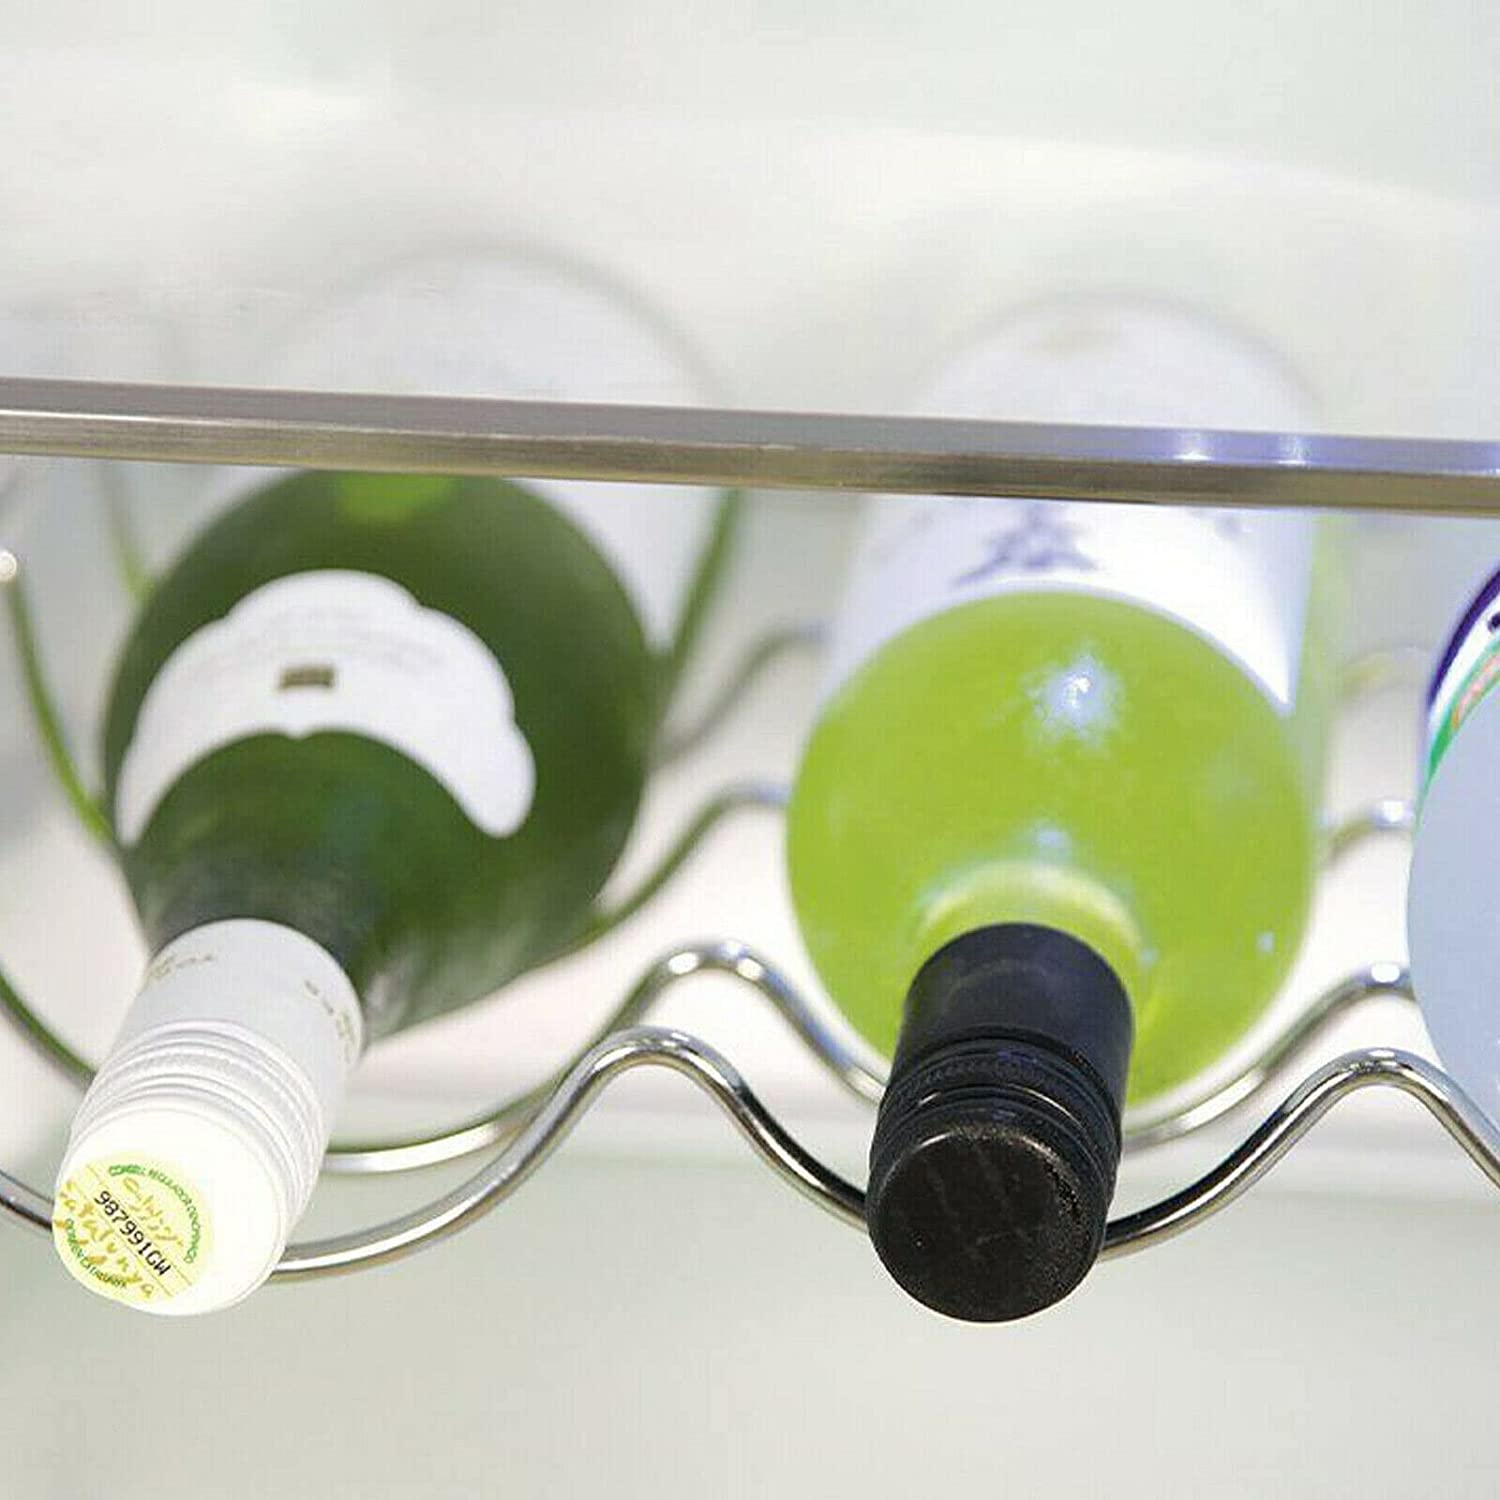 Wine Bottle Rack Shelf Insert compatible with Caple Fridge (460 x 290 x 70mm)